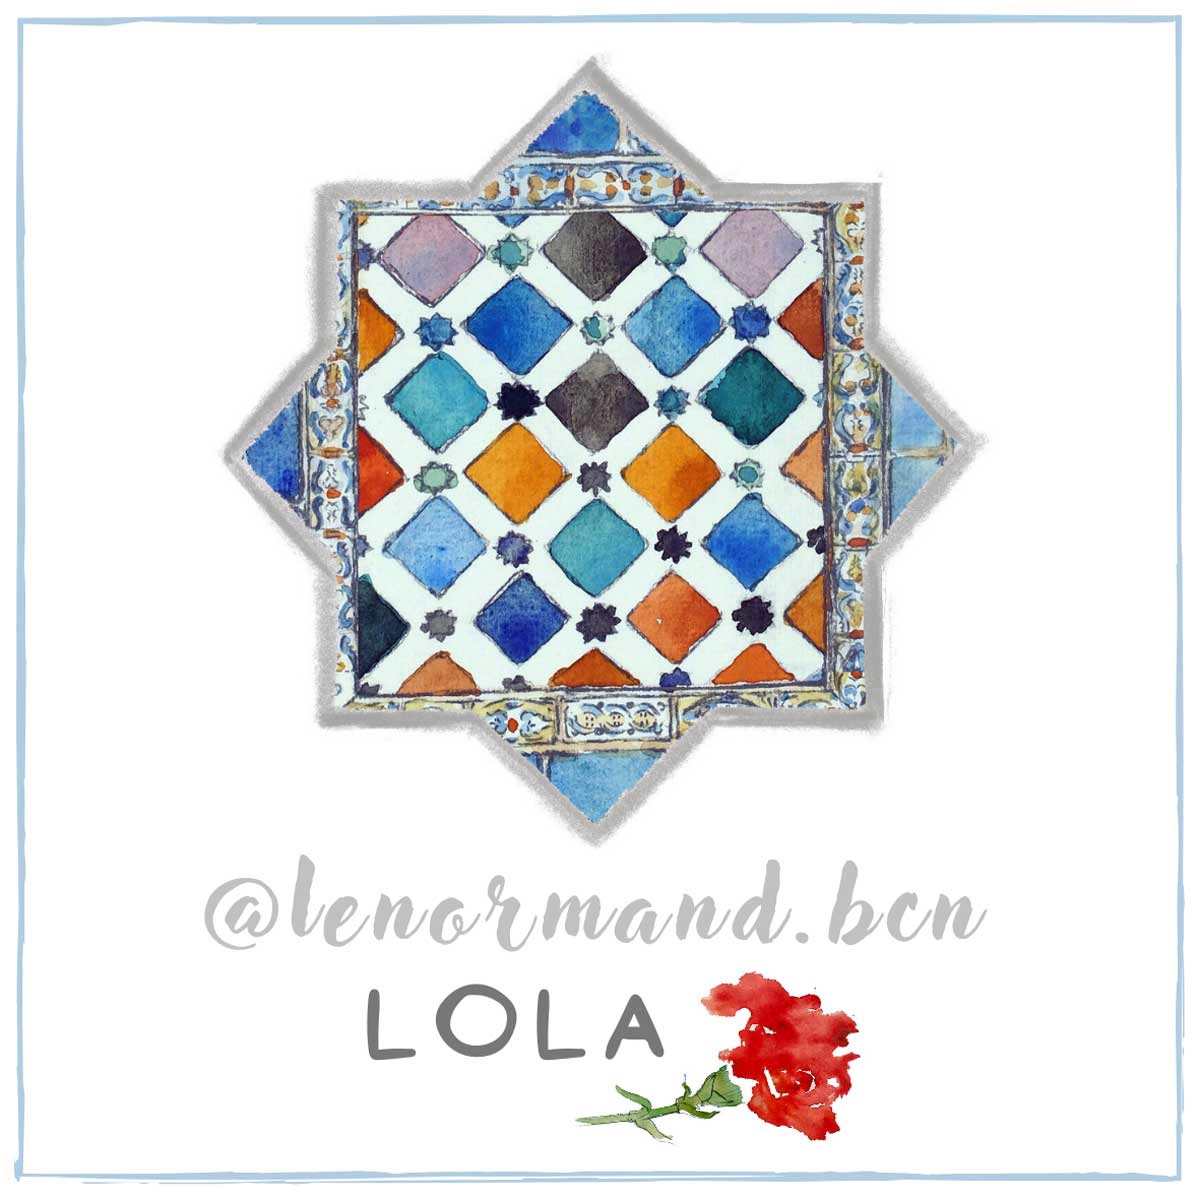 Marina Berdalet - Bugada - logo - Lenormand.bcn - Lola Clavel